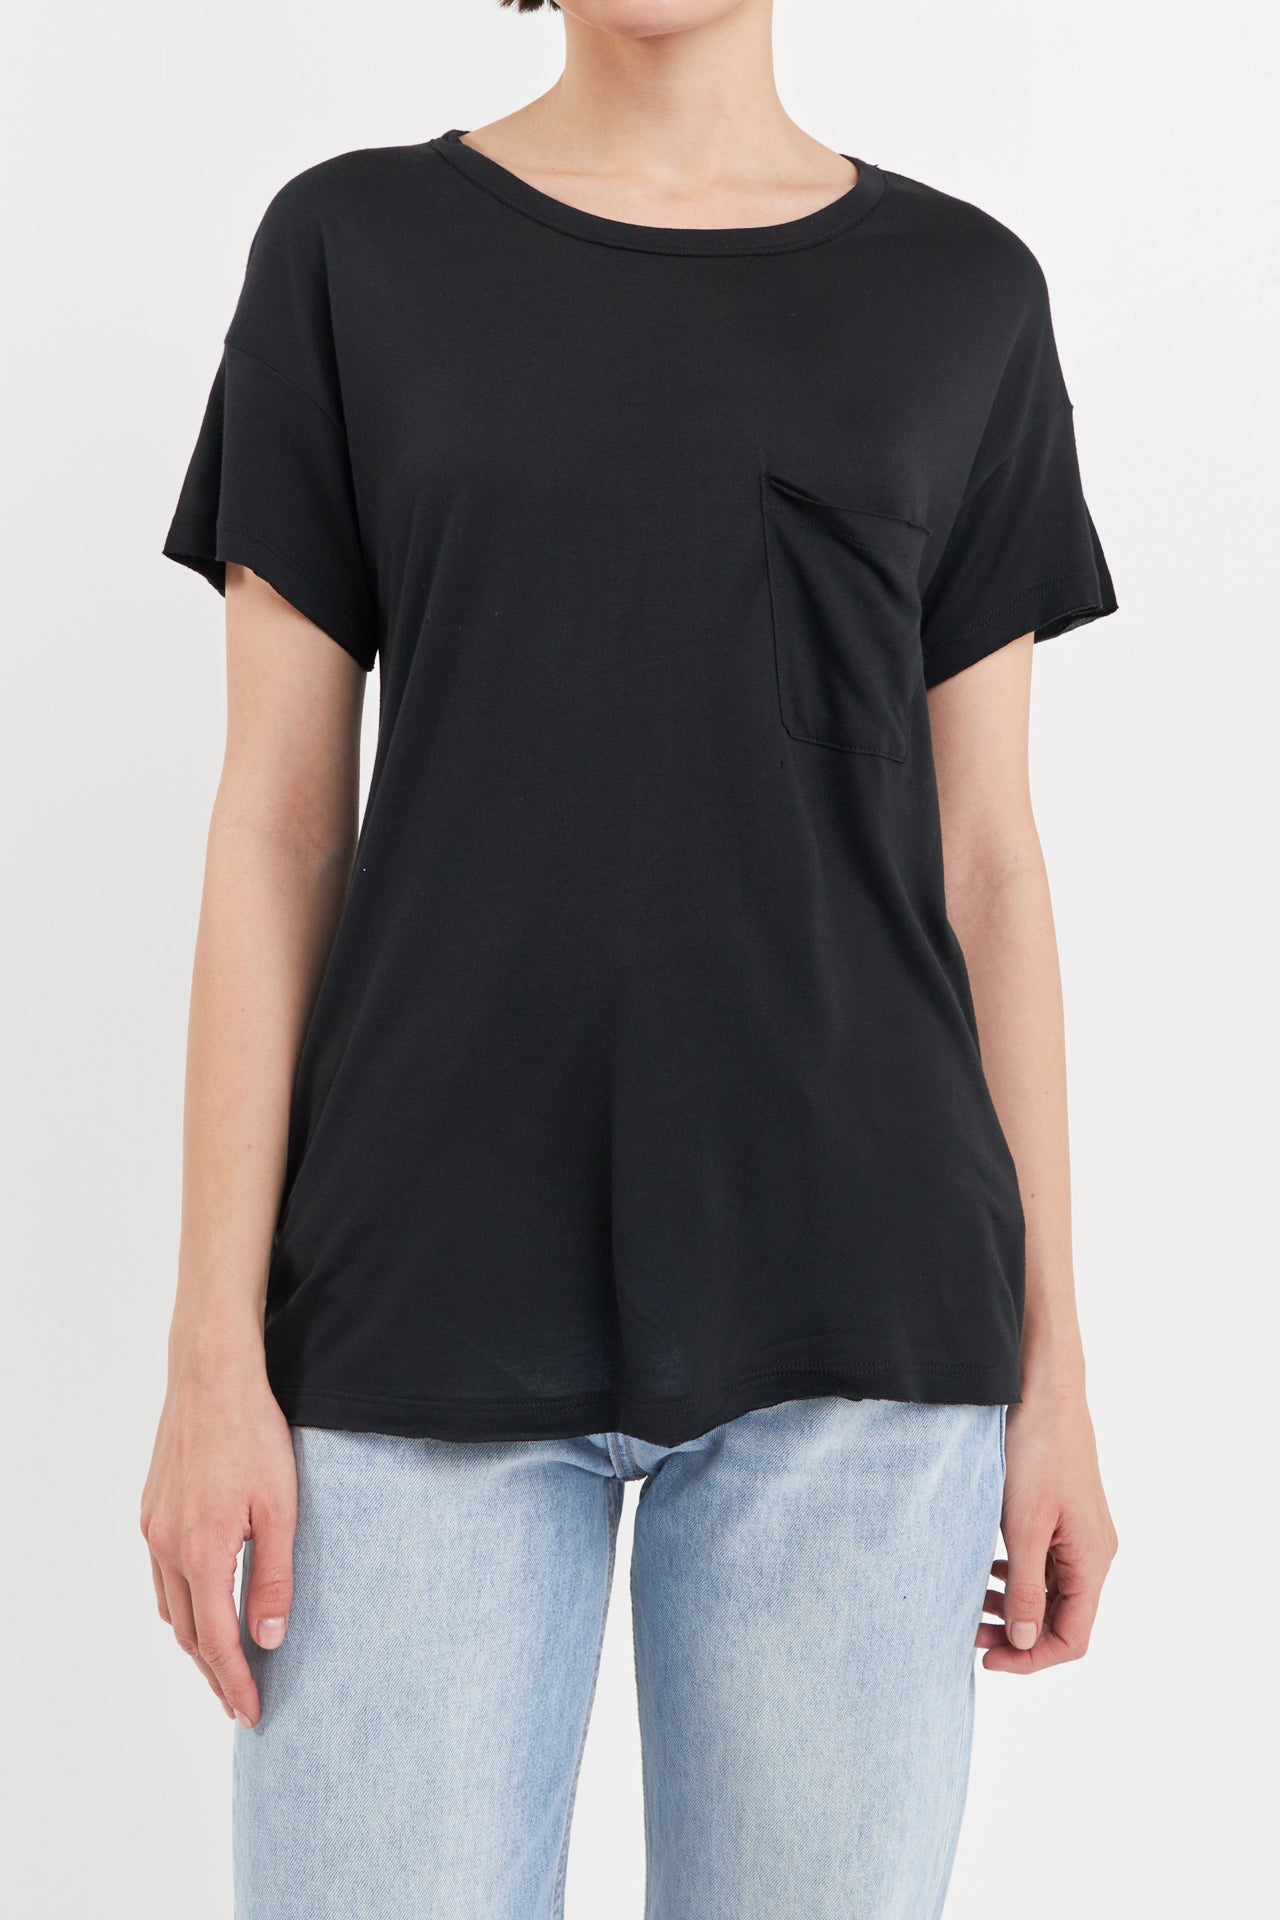 GREY LAB - Modal Pocket T-Shirt - T-SHIRTS available at Objectrare